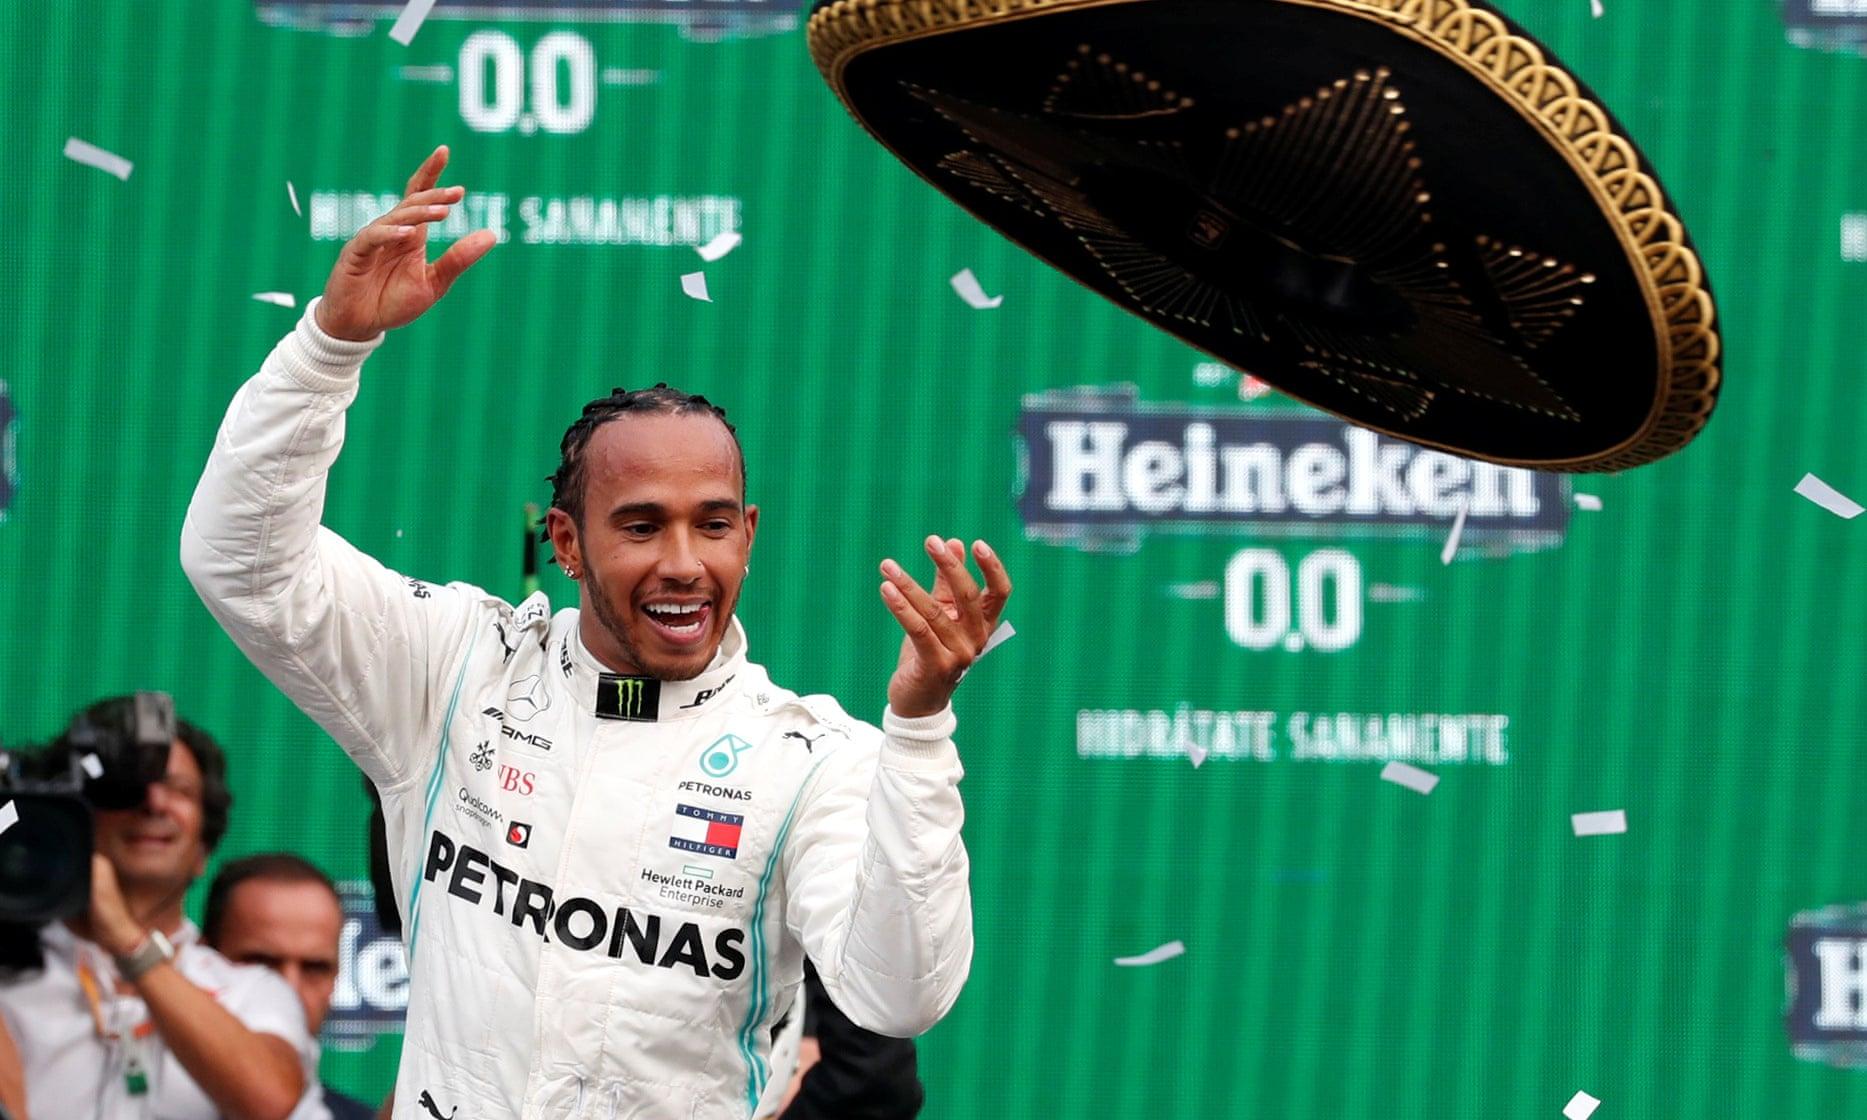 Lewis Hamilton wins Mexico Grand Prix 2019_40.1